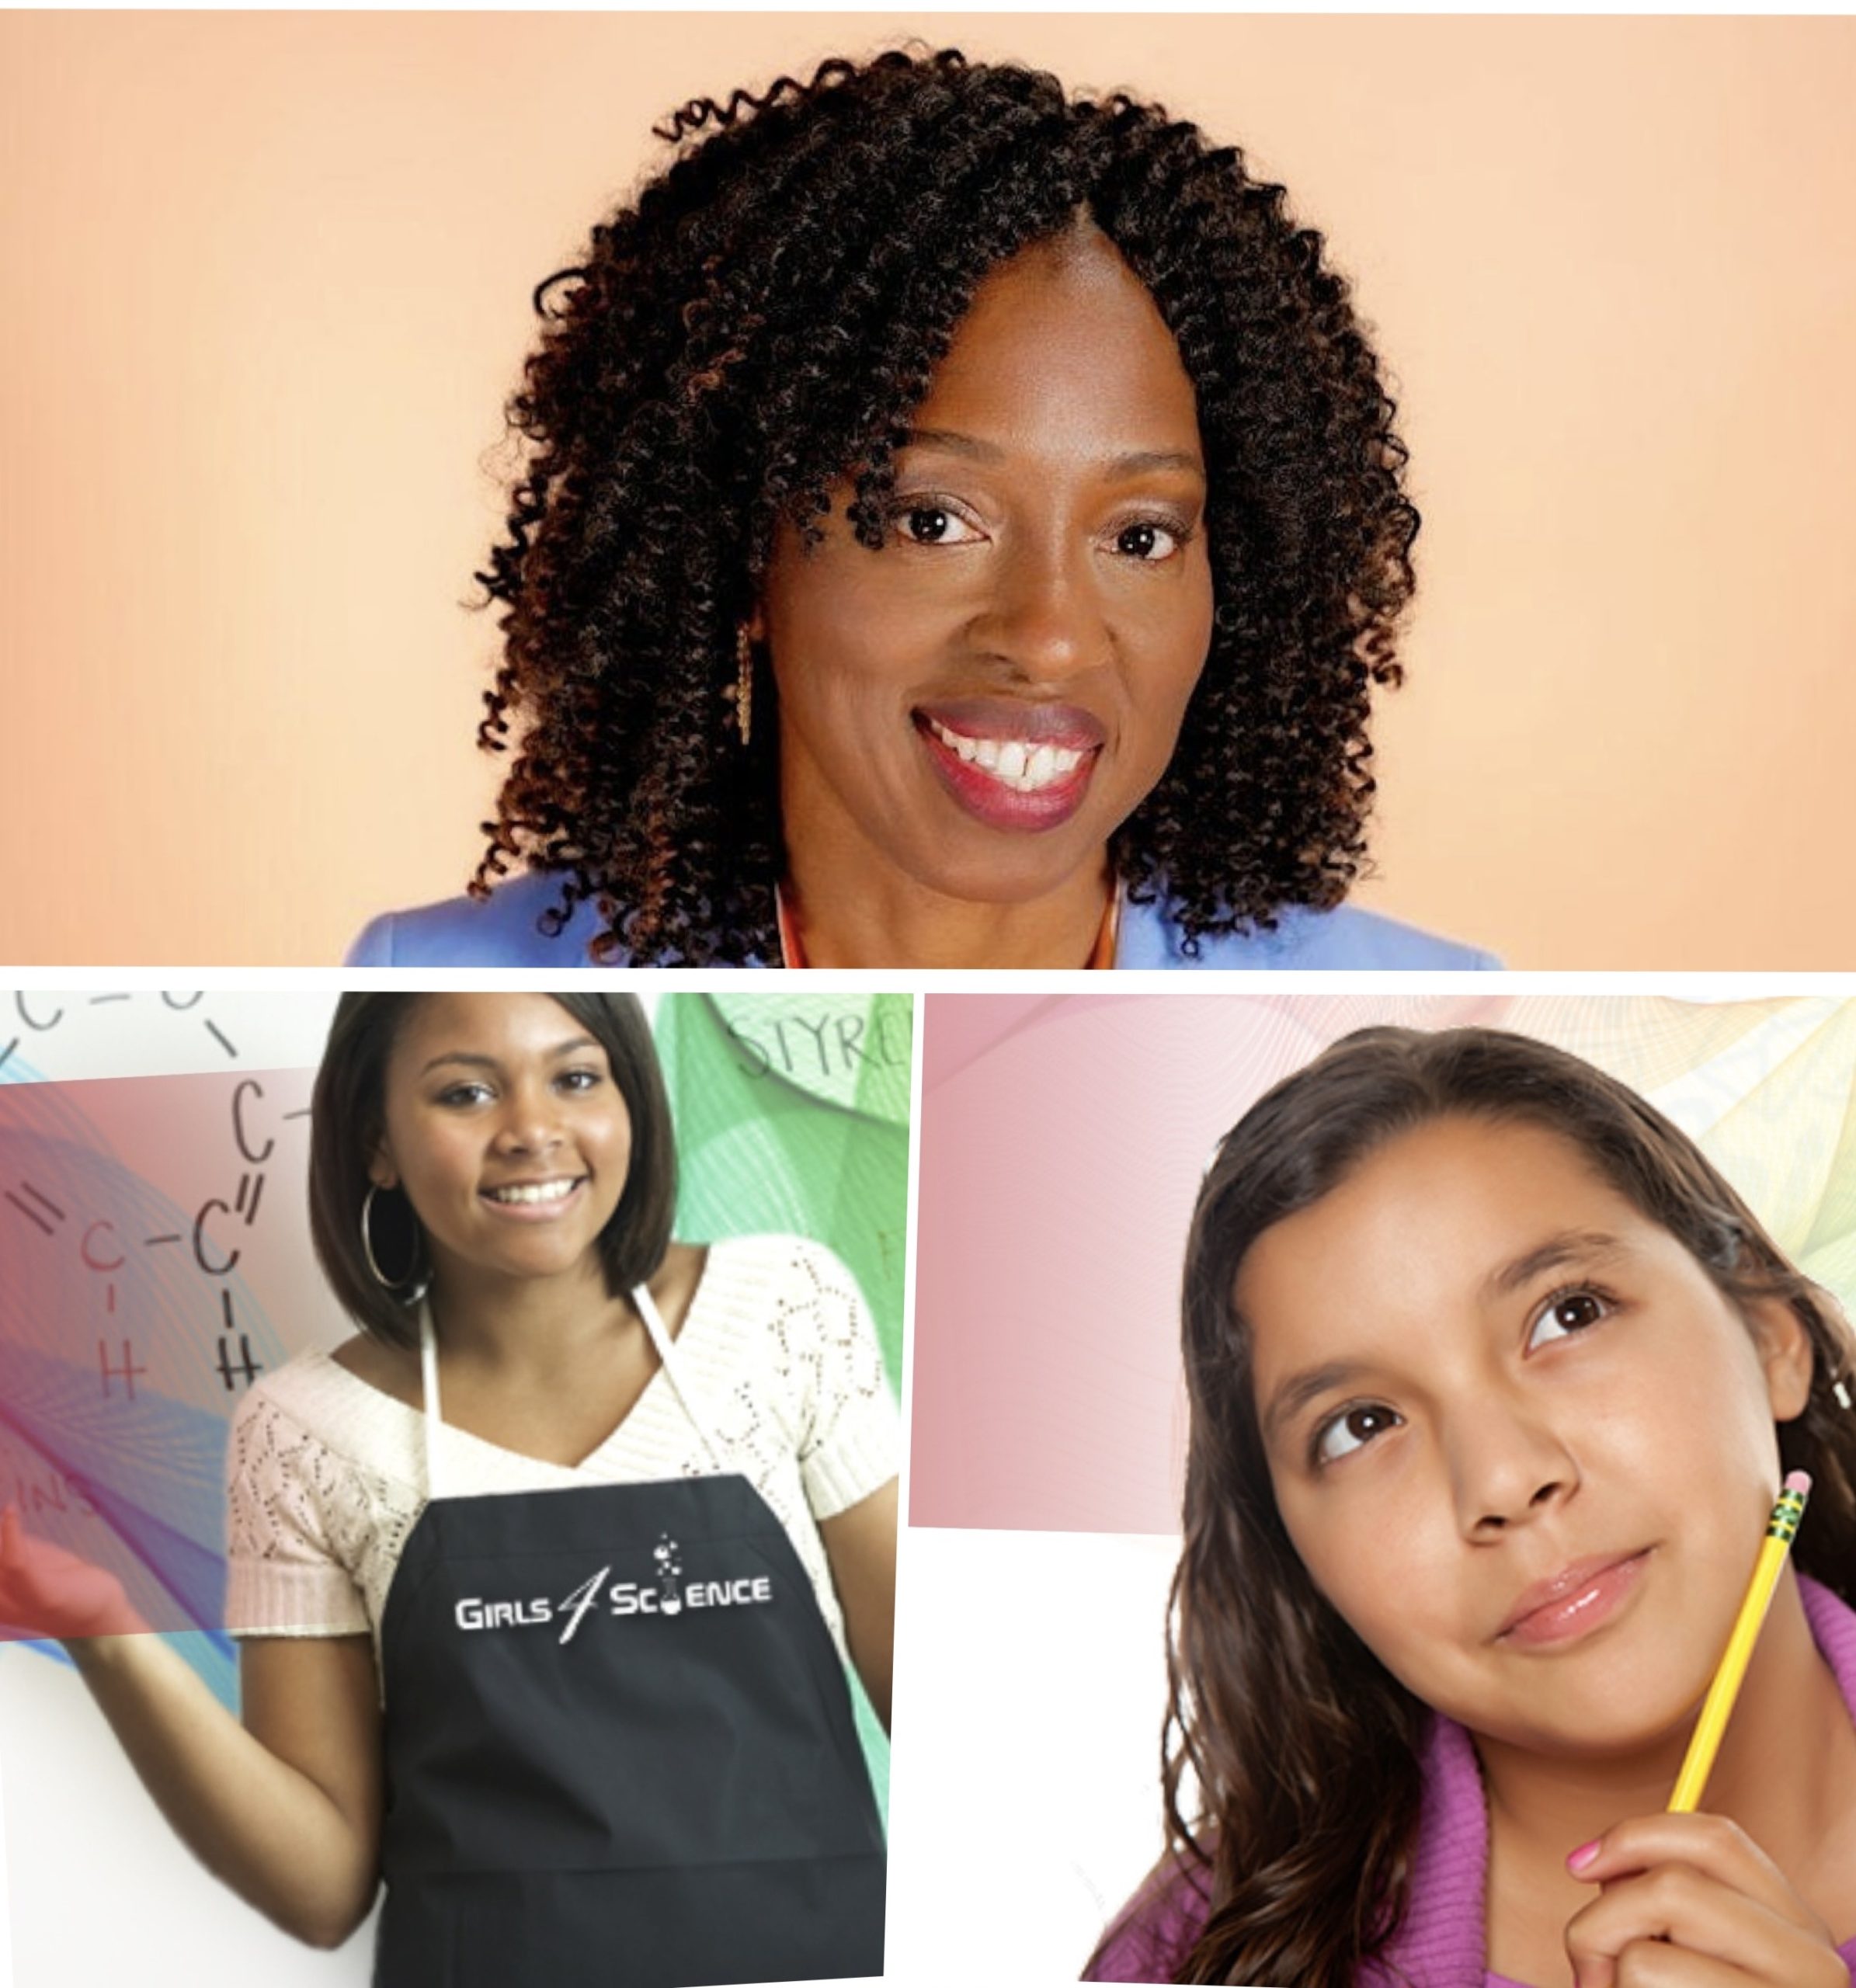 Girls 4 Science to Host Women in STEM Fundraiser